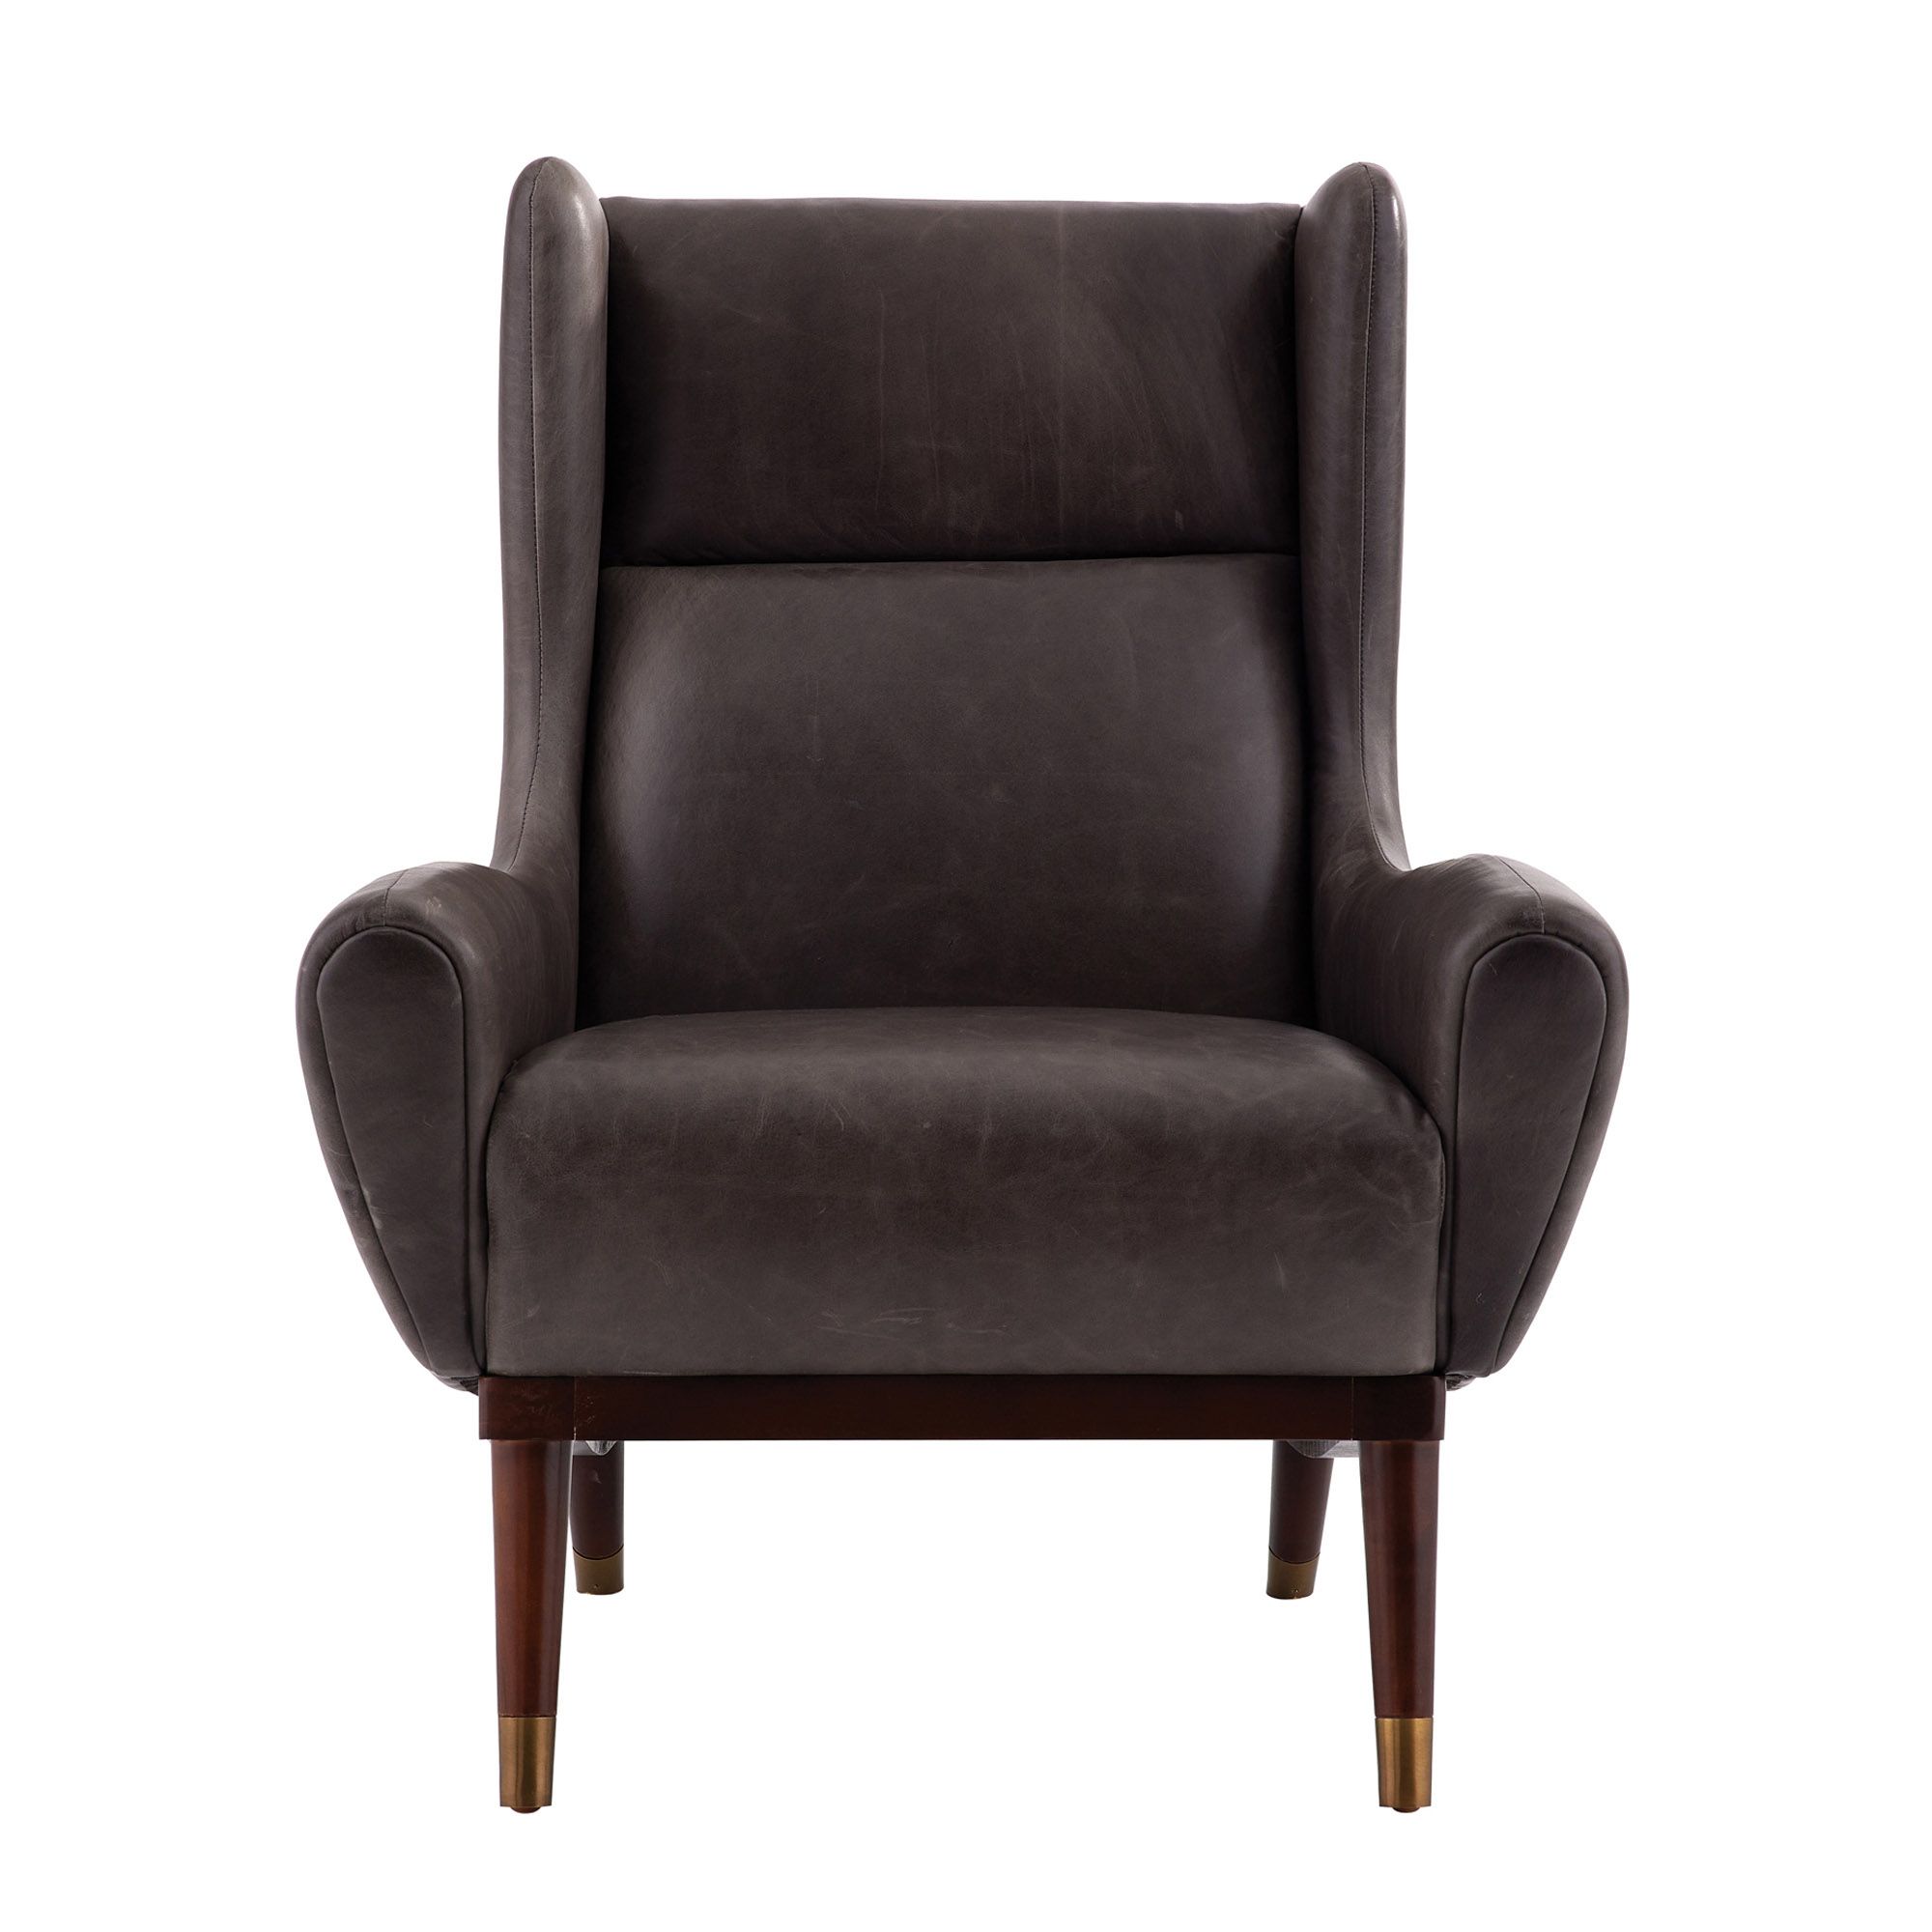 Купить Кресло Ophelia Lounge Chair Graphite Leather Dark Walnut в интернет-магазине roooms.ru